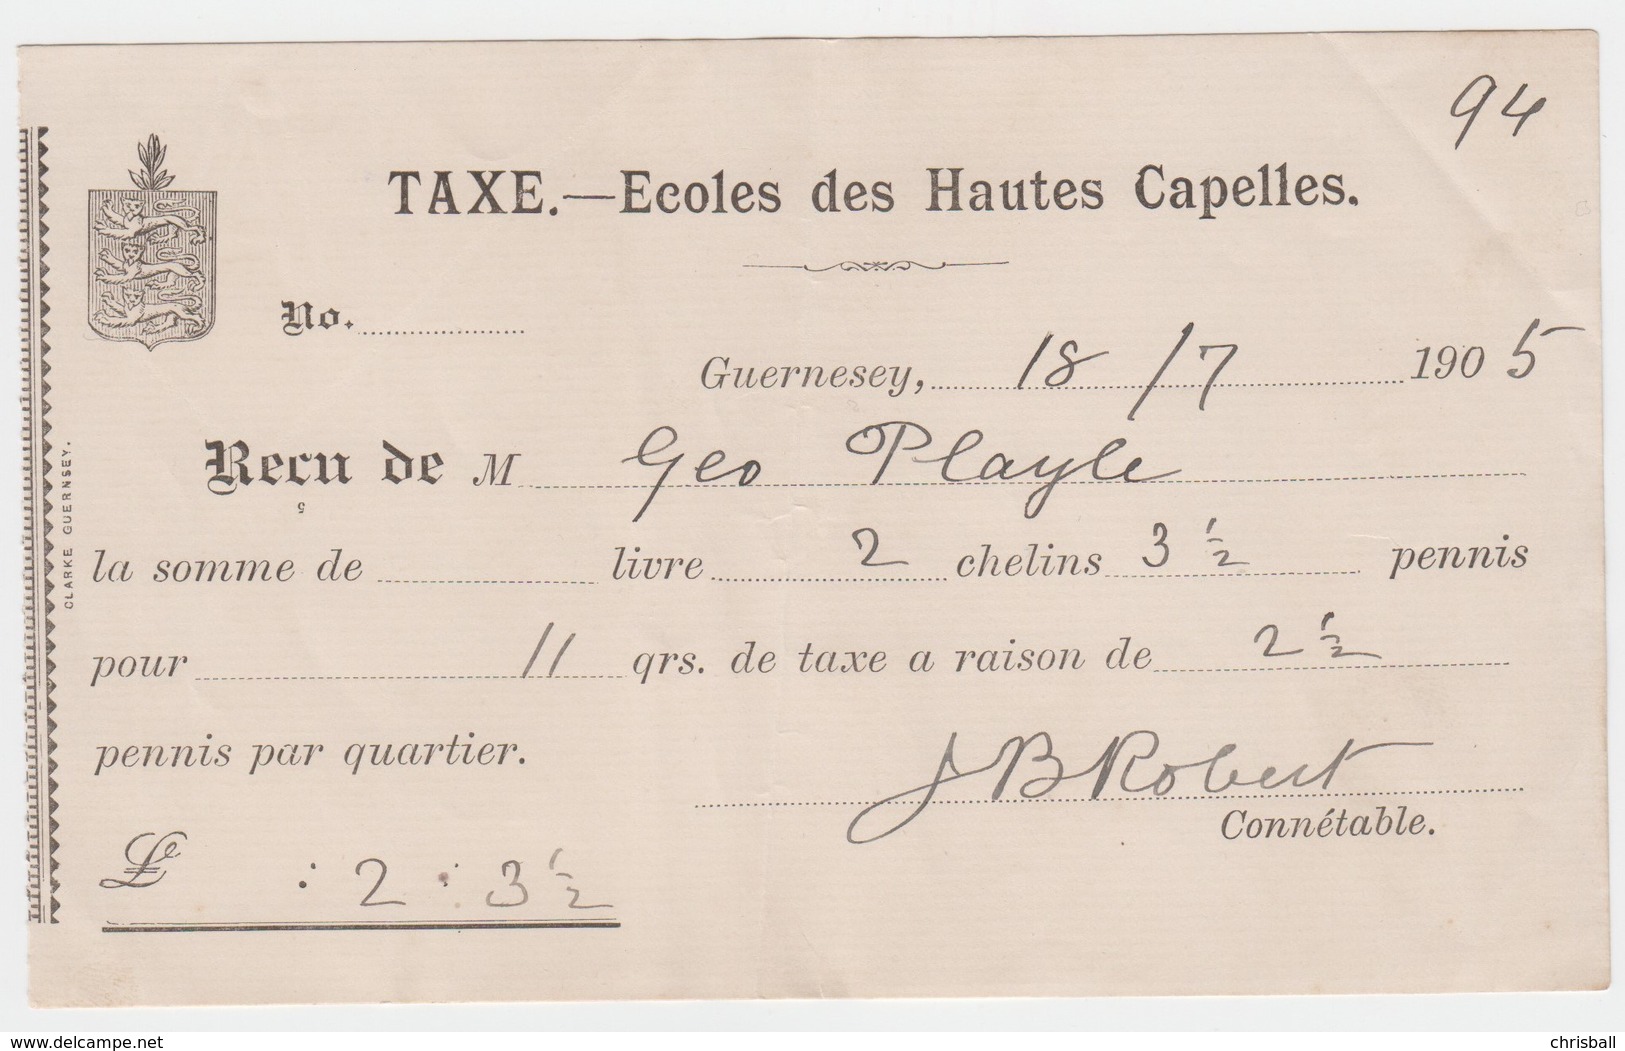 Guernsey - Ecoles Des Hautes Capelles Receipt For Payment Dated 18 July 1905 - Regno Unito